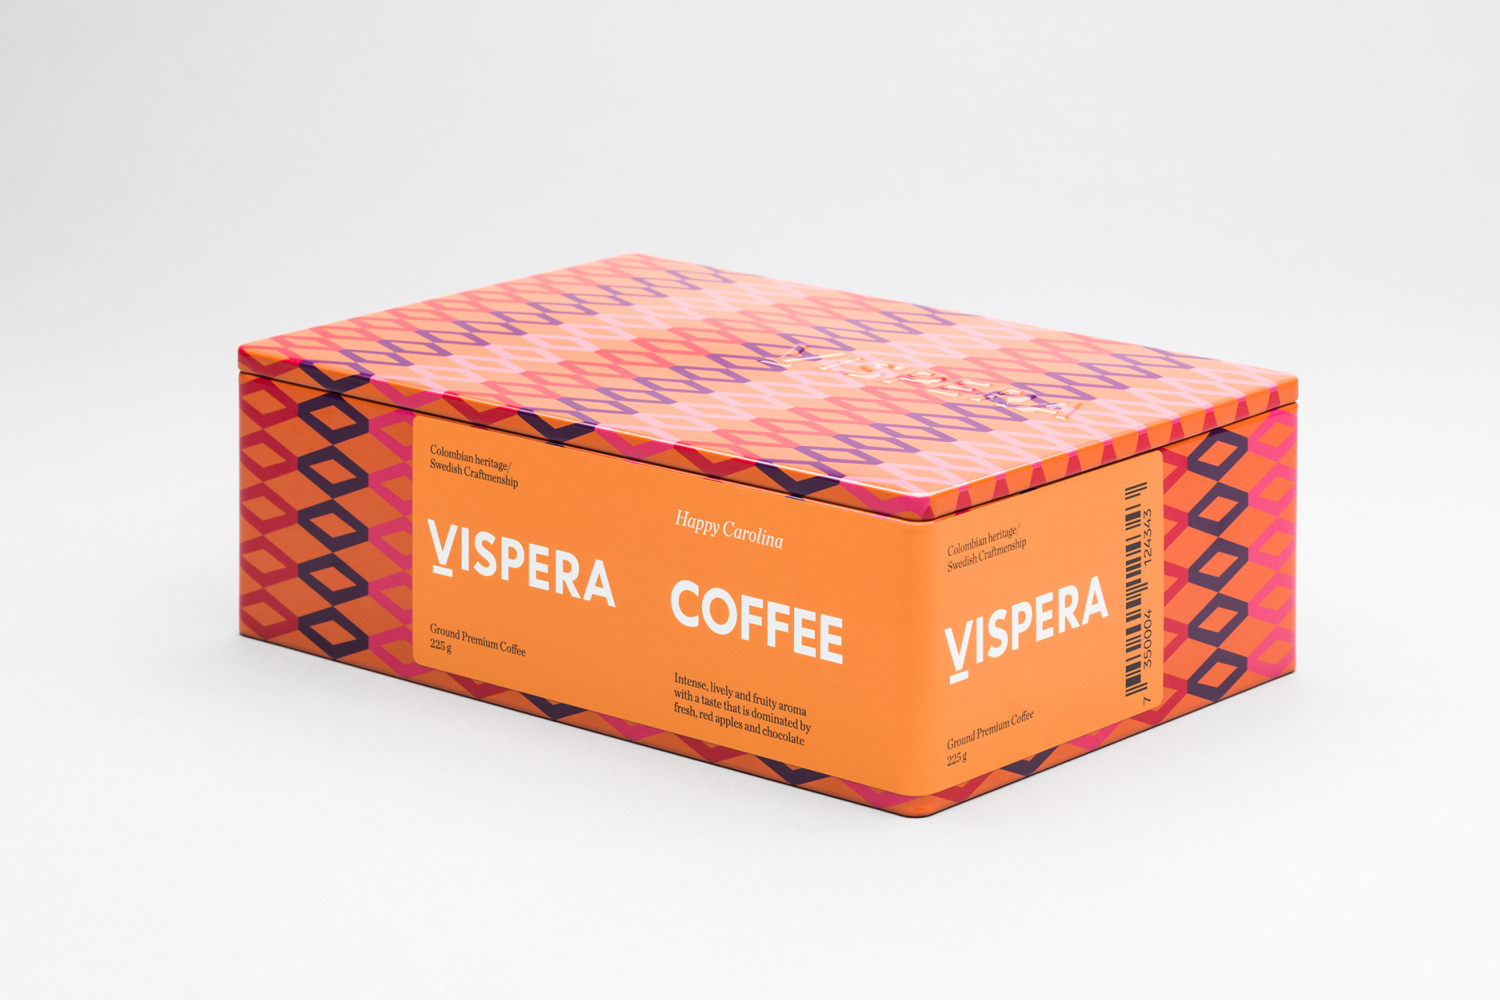 Swedish Packaging Design – Víspera Coffee by Stockholm Design Lab